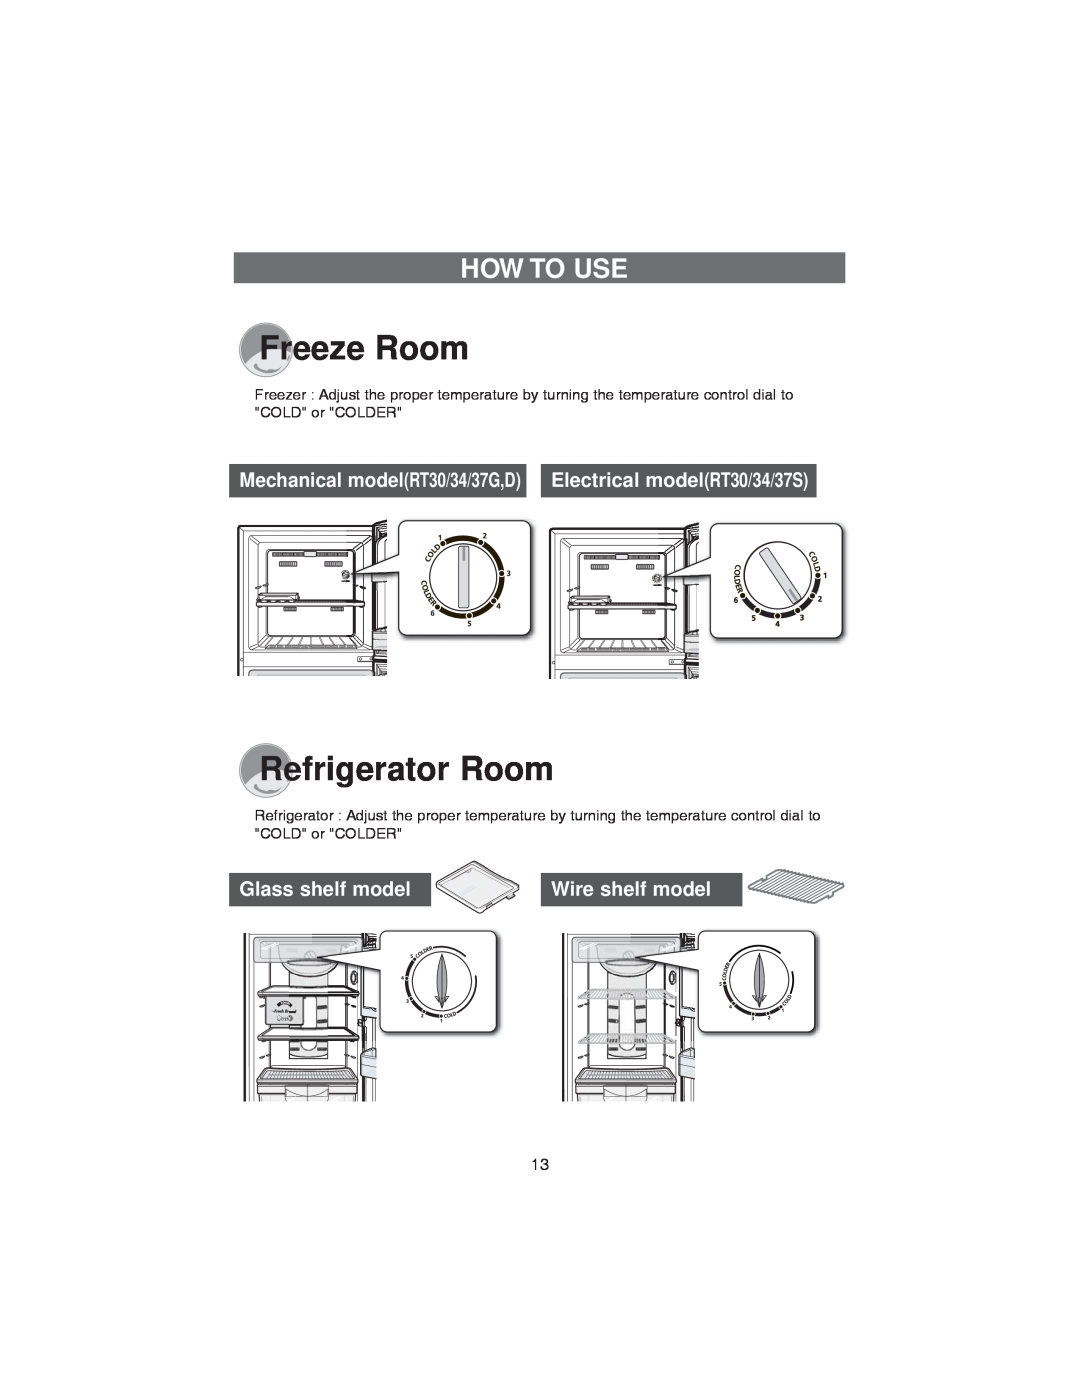 Samsung RT34S, RT37D Freeze Room, Refrigerator Room, How To Use, Mechanical modelRT30/34/37G,D Electrical modelRT30/34/37S 